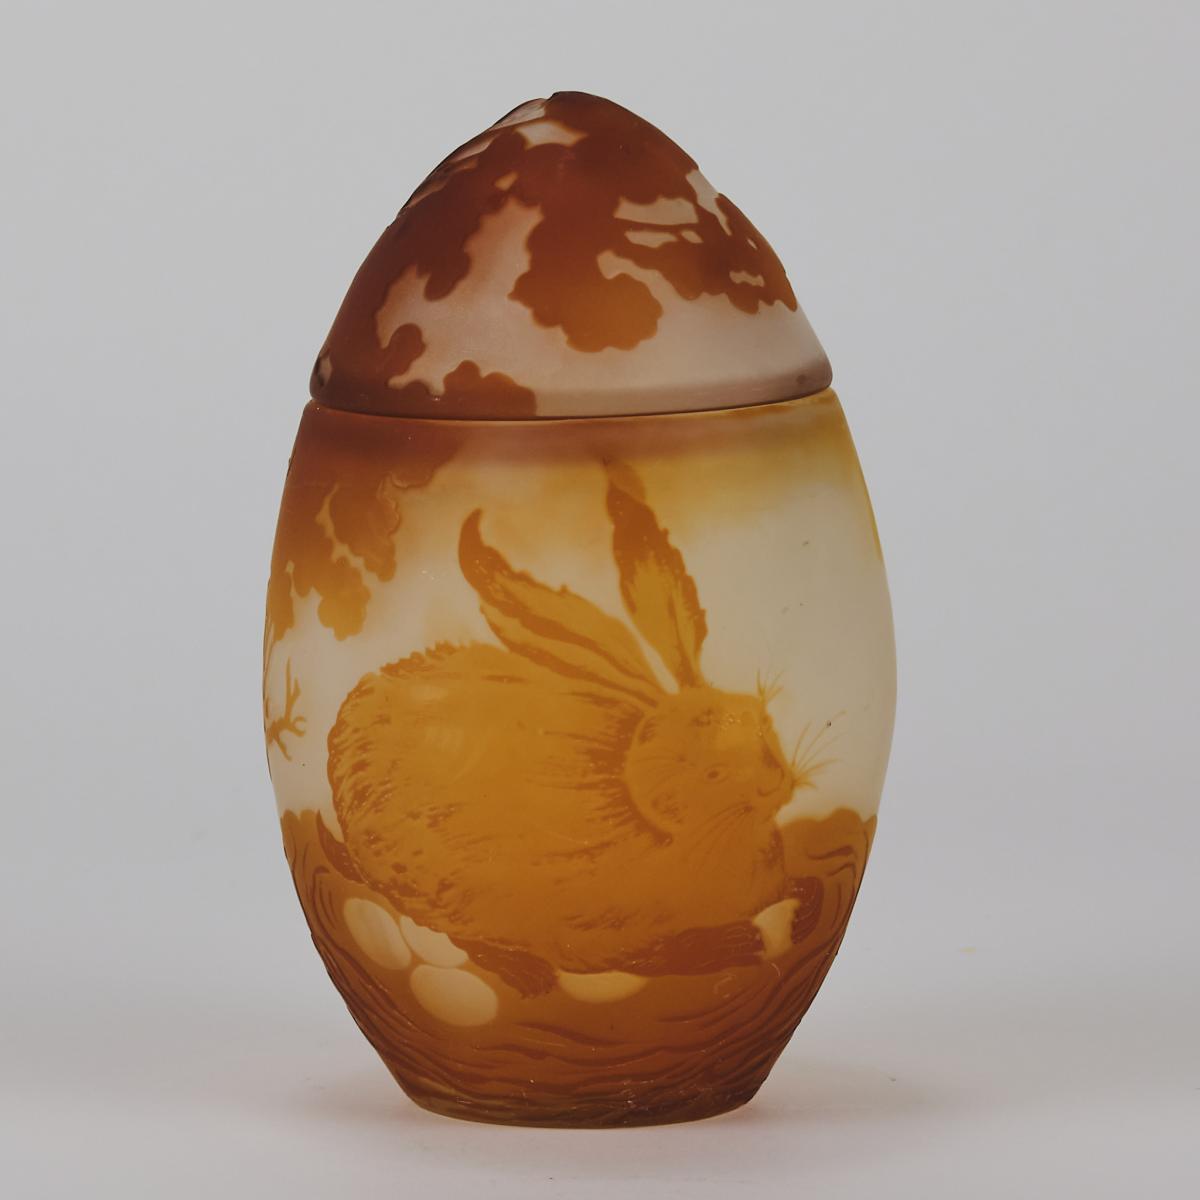 Cameo Glass Vase entitled "Easter Egg Vase with Bunny" by Émile Gallé